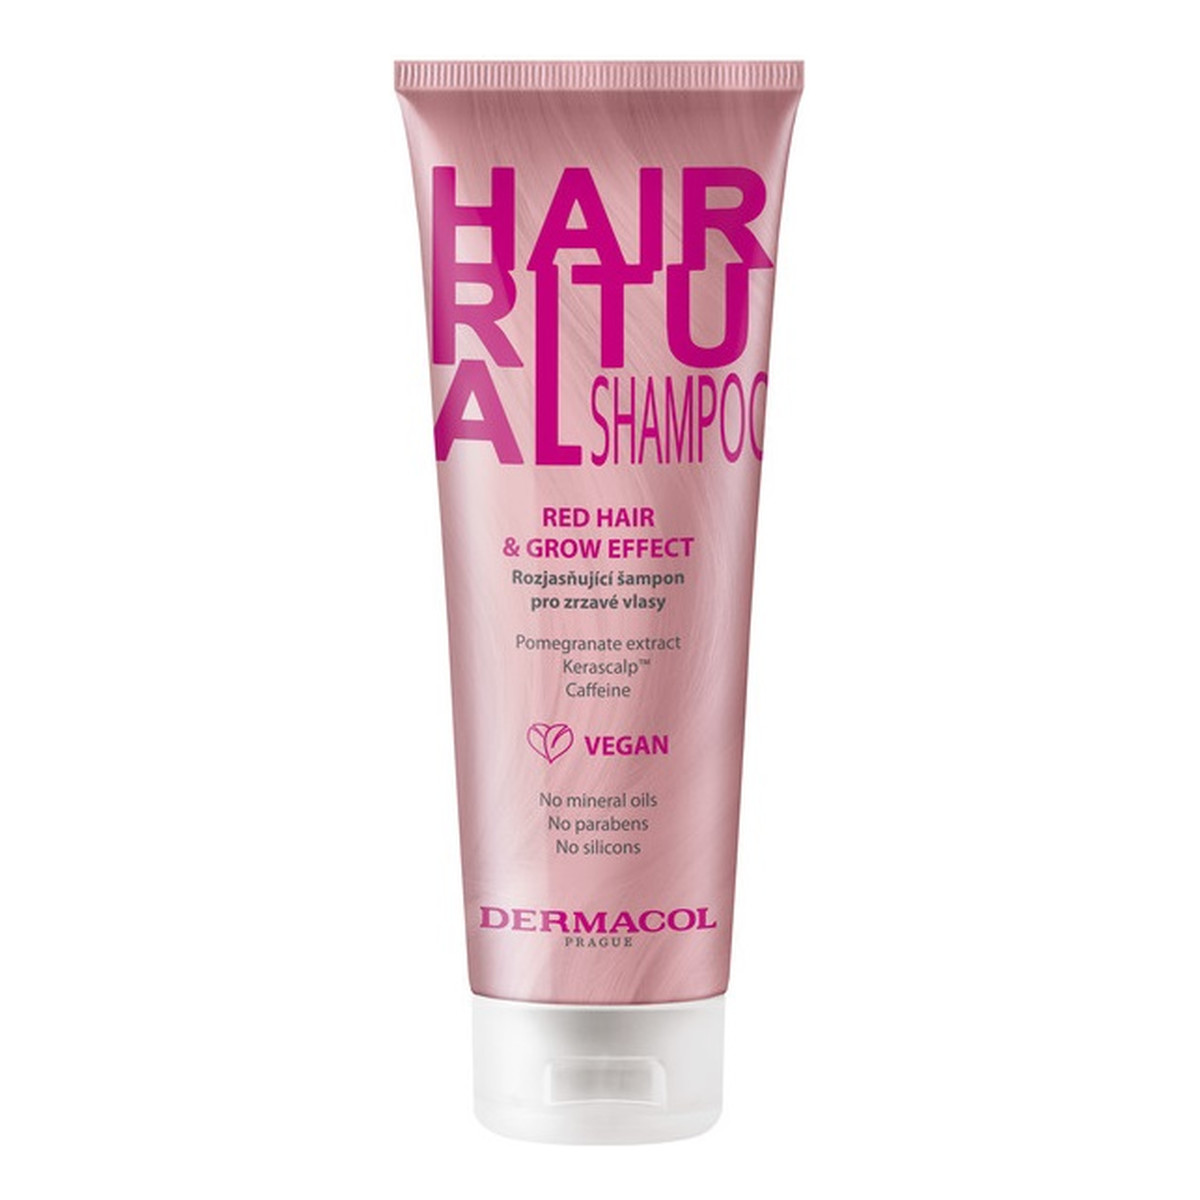 Dermacol Hair ritual shampoo szampon do włosów red hair & grow effect 250ml